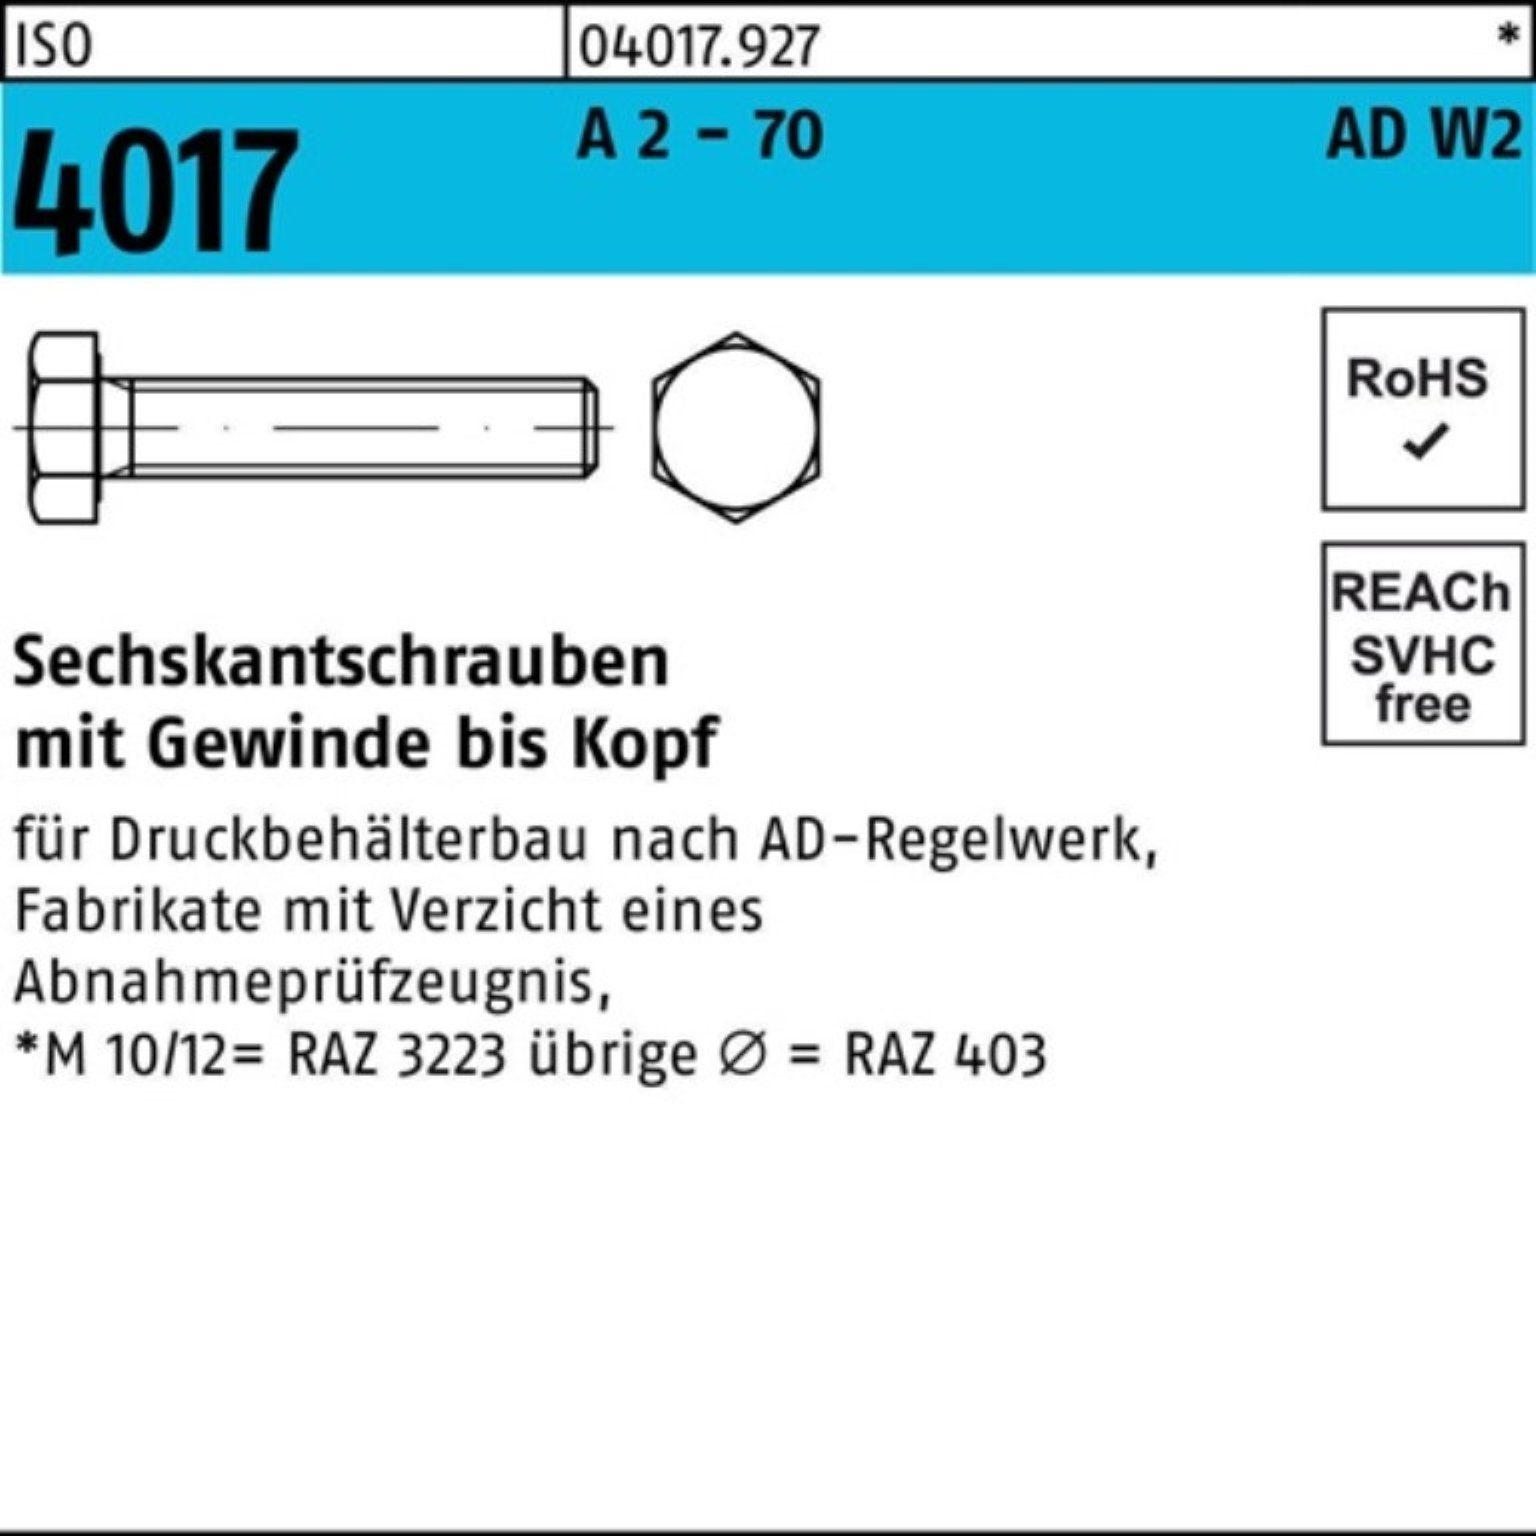 Bufab Sechskantschraube 100er Pack Sechskantschraube 4017 - 70 2 25 A AD-W2 ISO M20x VG 75 St